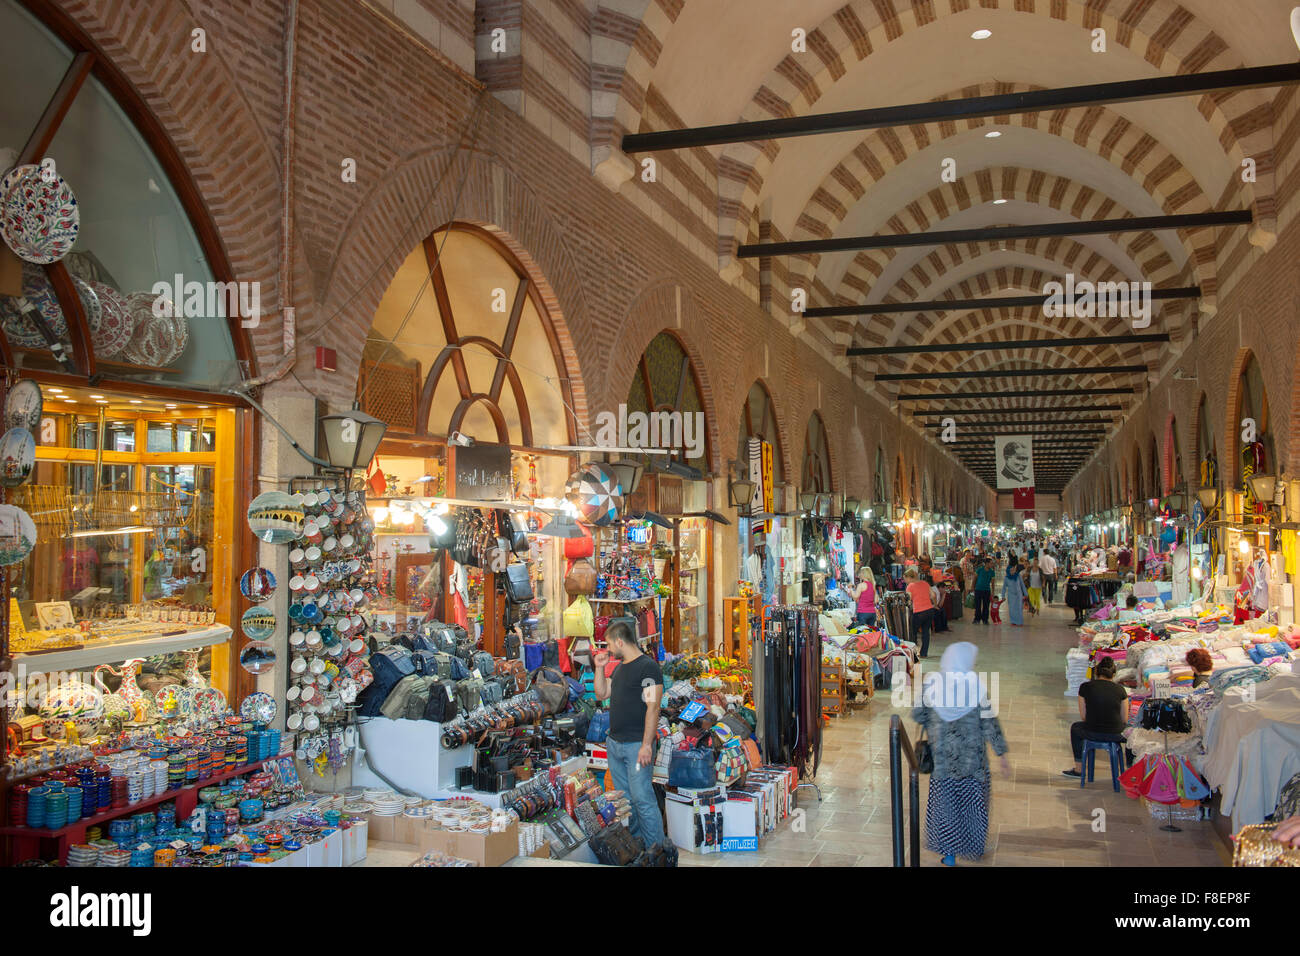 Türkei, Thrakien, Edirne, Semiz-Ali-Pascha-Carsisi, Bazaar Foto Stock